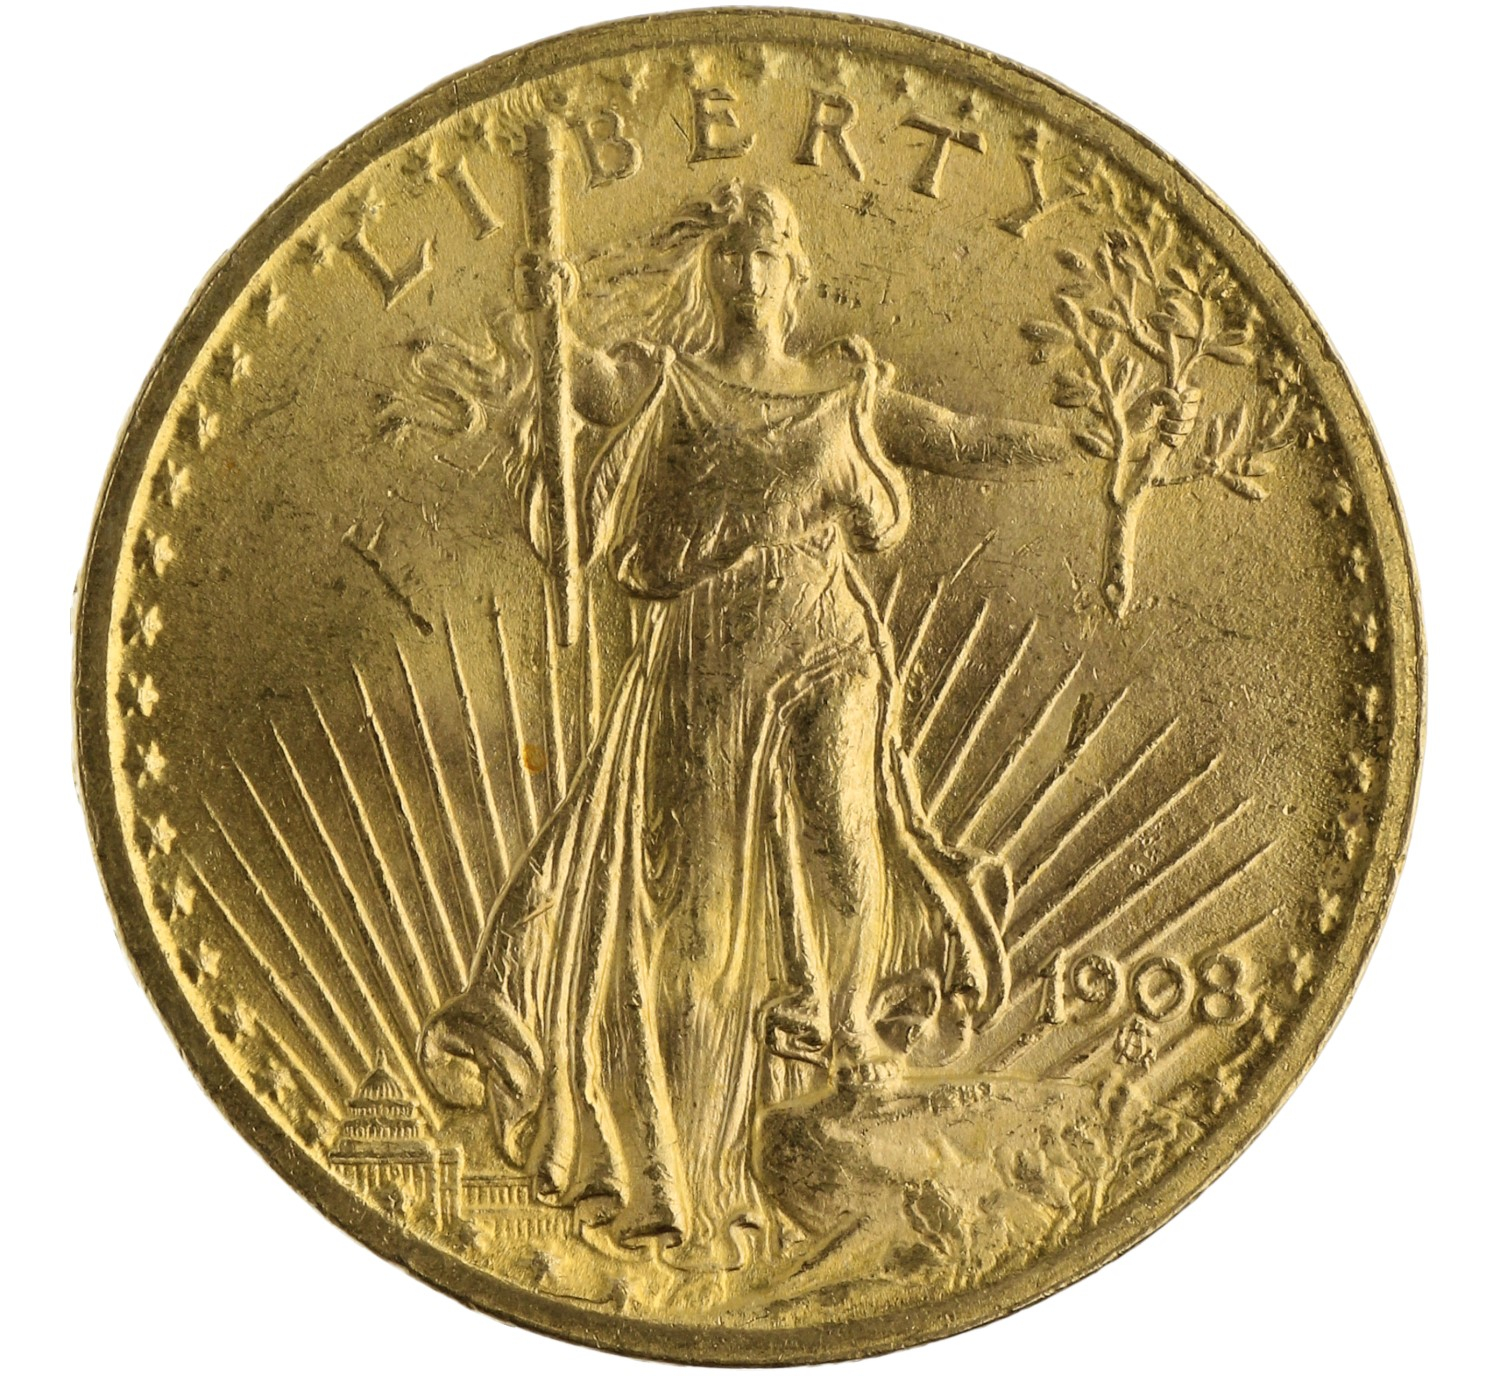 20 Dollars - USA - 1908 (No Motto)